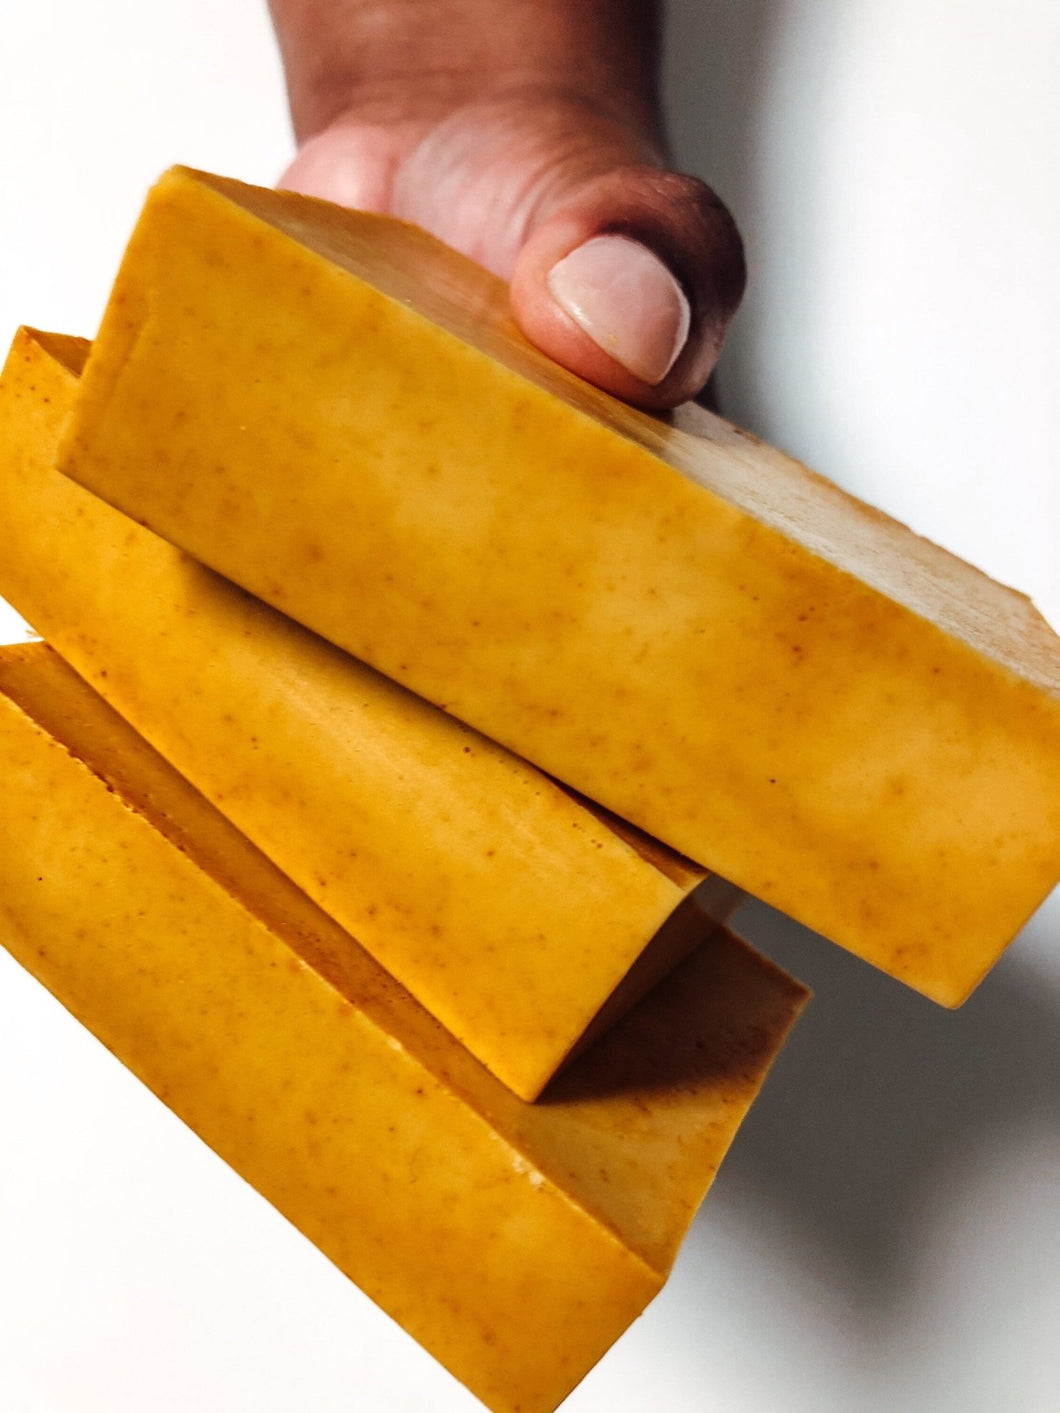 Turmeric Soap|Handmade Soap|Shea Butter Soap|Soap|Natural Soap|Natural Skin Care|Self Care|Handmade Soap|Soap|Christmas Gifts